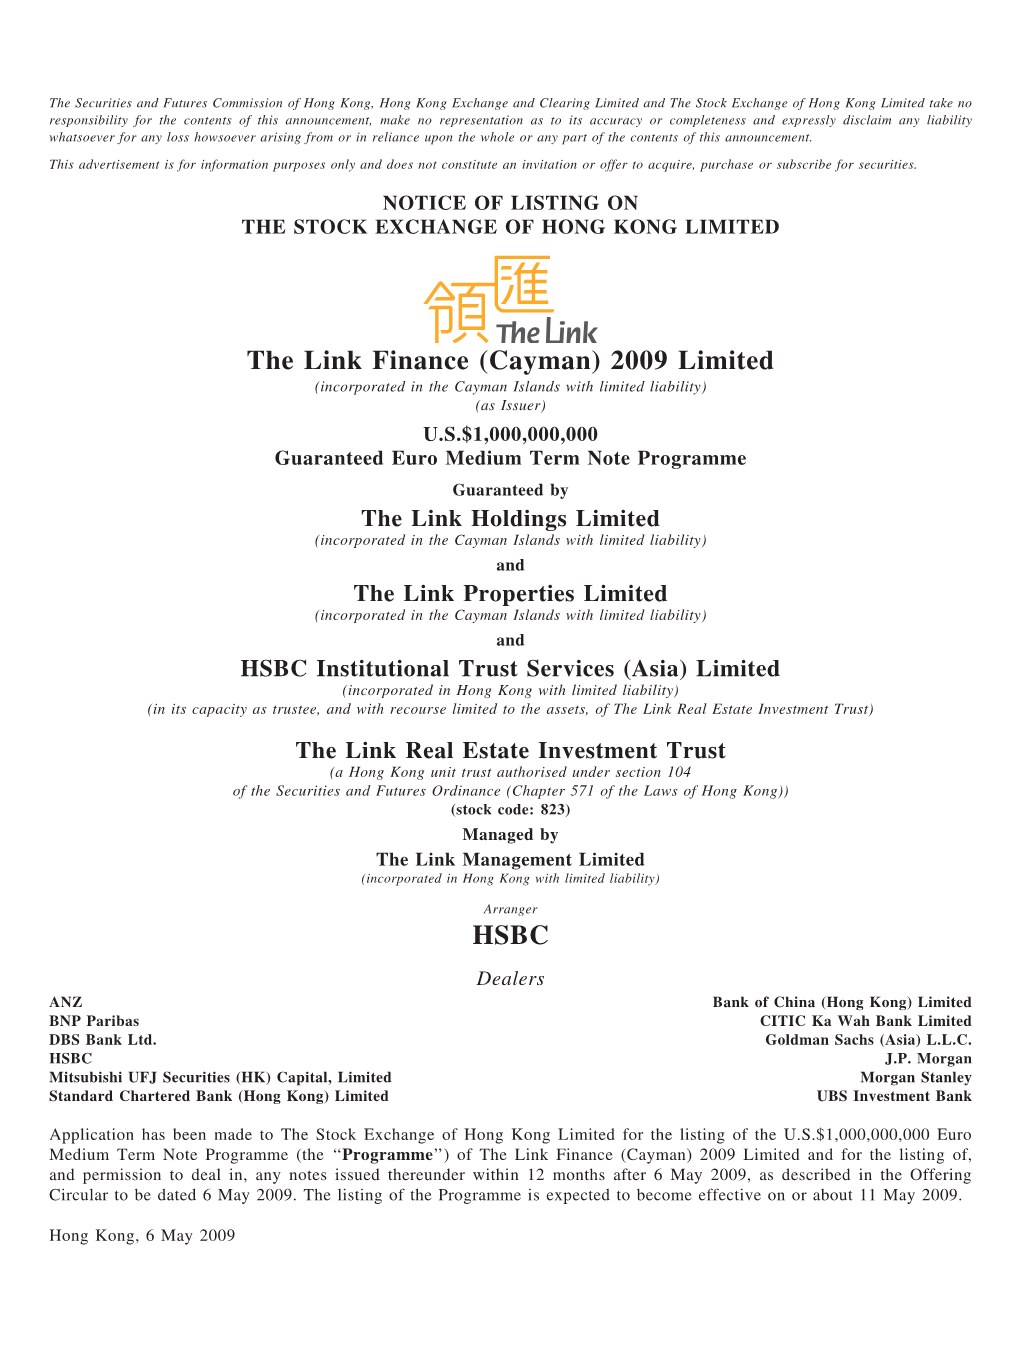 The Link Finance (Cayman) 2009 Limited HSBC